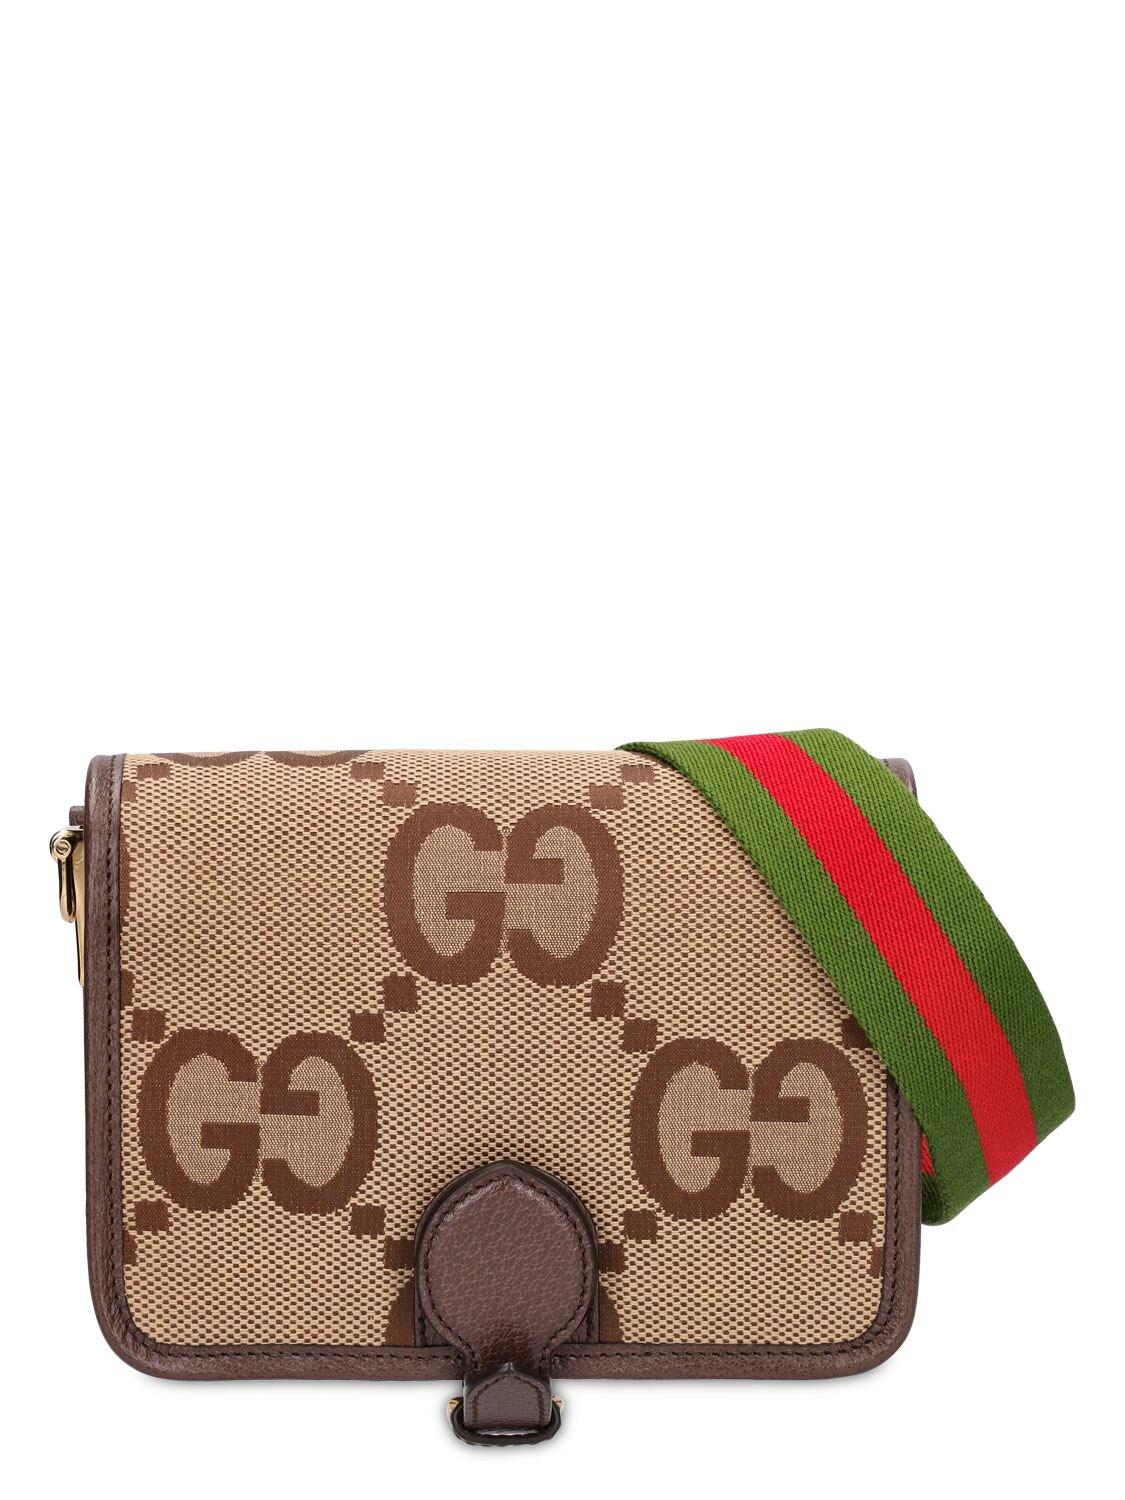 Jumbo GG messenger bag in camel and ebony GG canvas